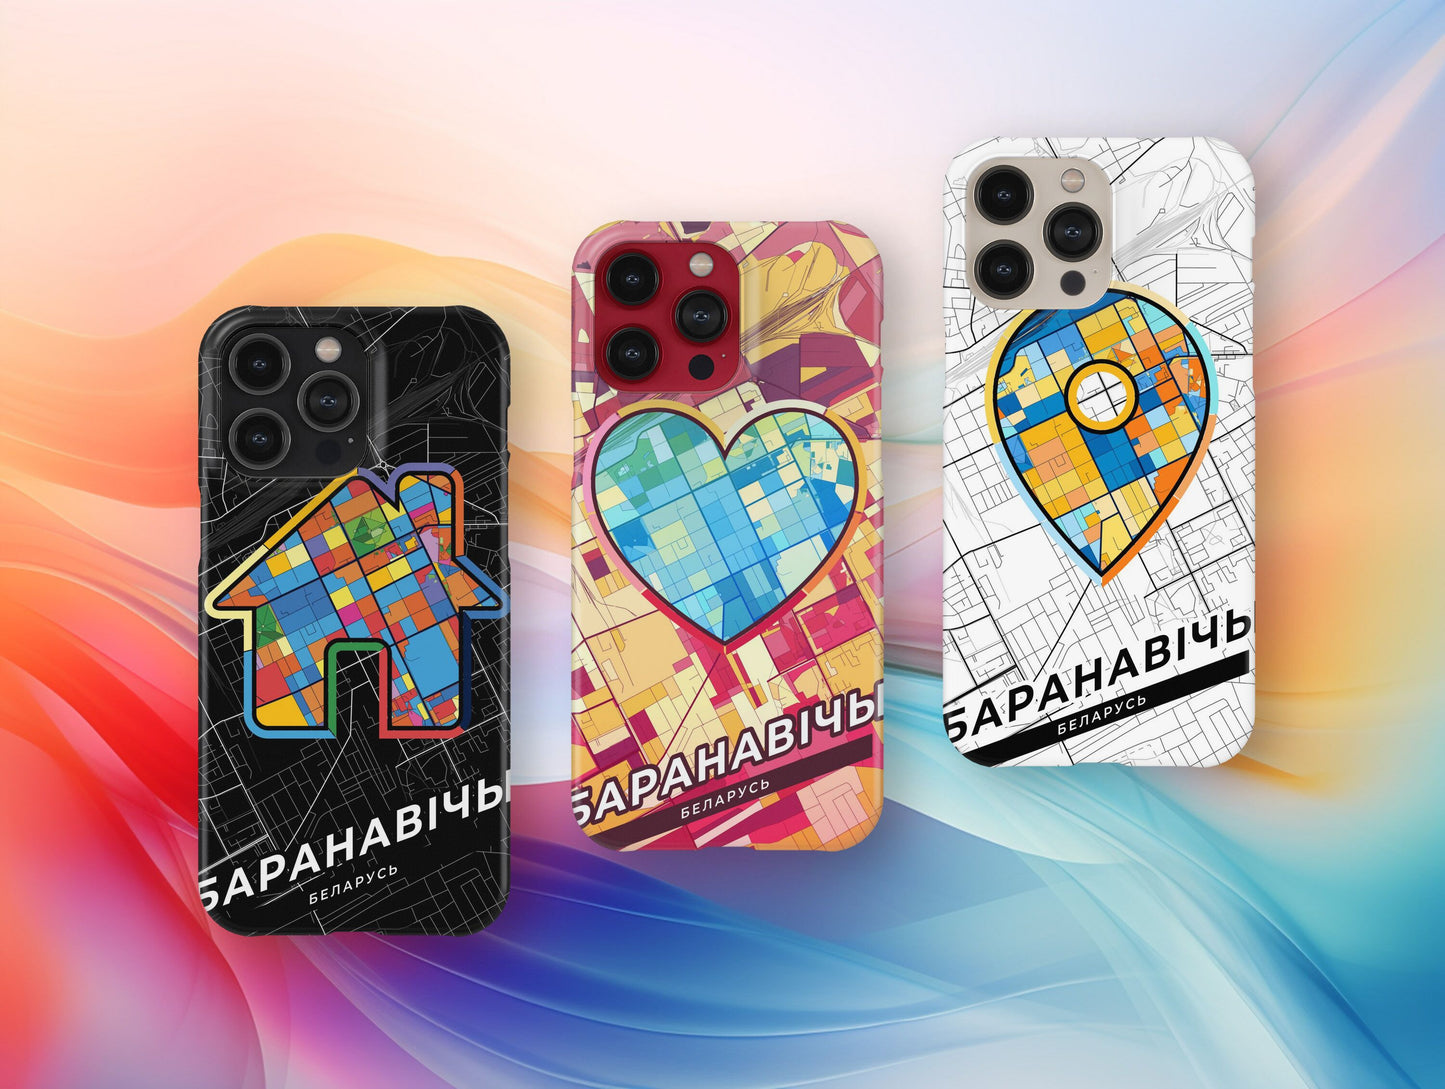 Баранавічы Беларусь slim phone case with colorful icon